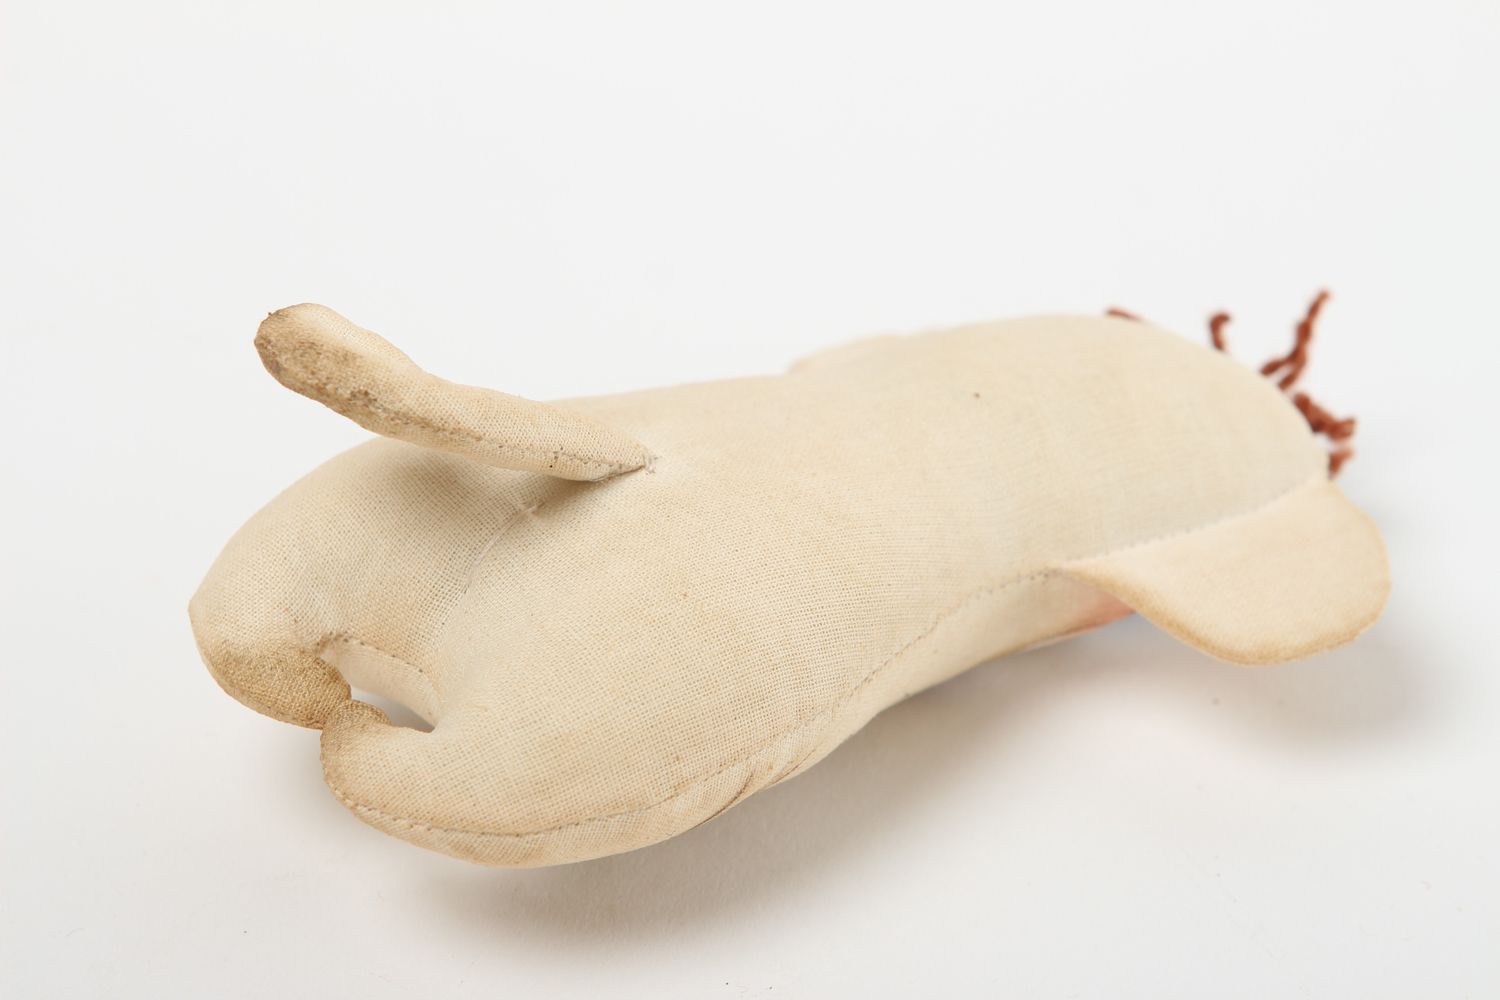 Handmade toy unusual animal toys for children nursery decor gift ideas photo 4